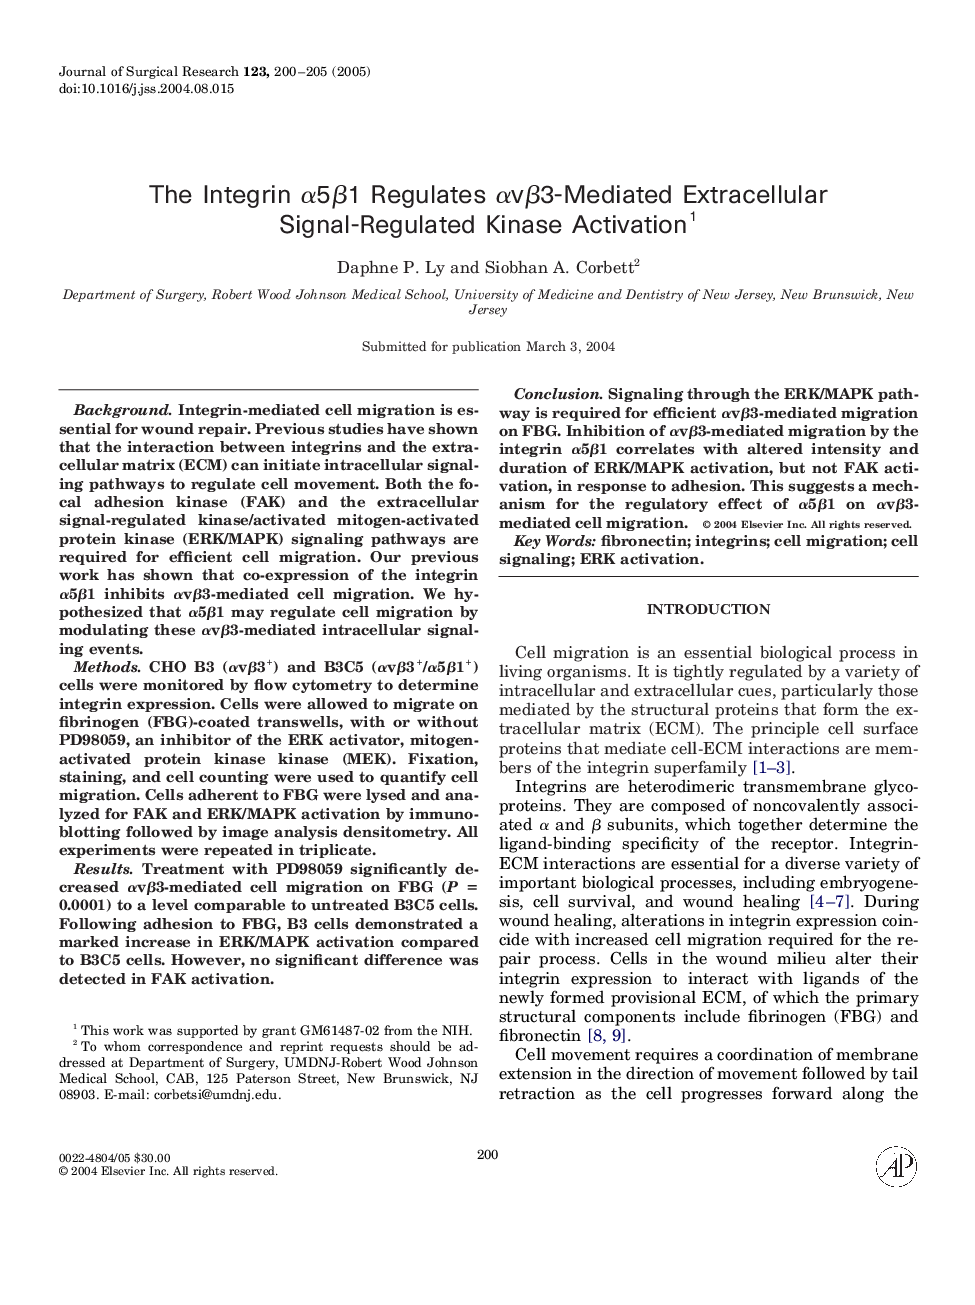 The integrin Î±5Î²1 regulates Î±vÎ²3-mediated extracellular signal-regulated kinase activation1